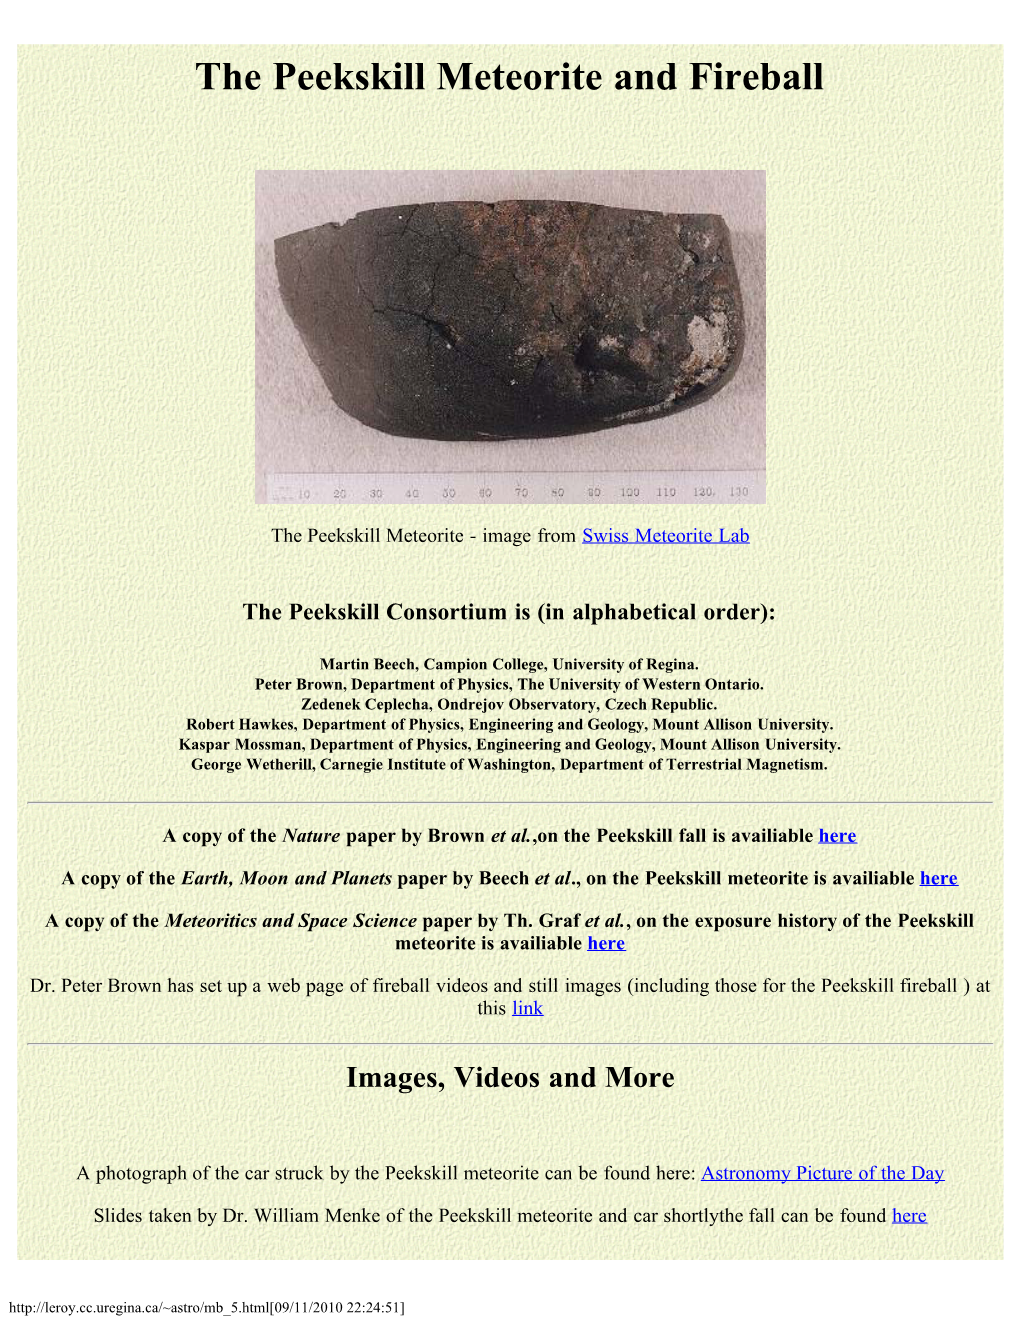 The Peekskill Meteorite and Fireball